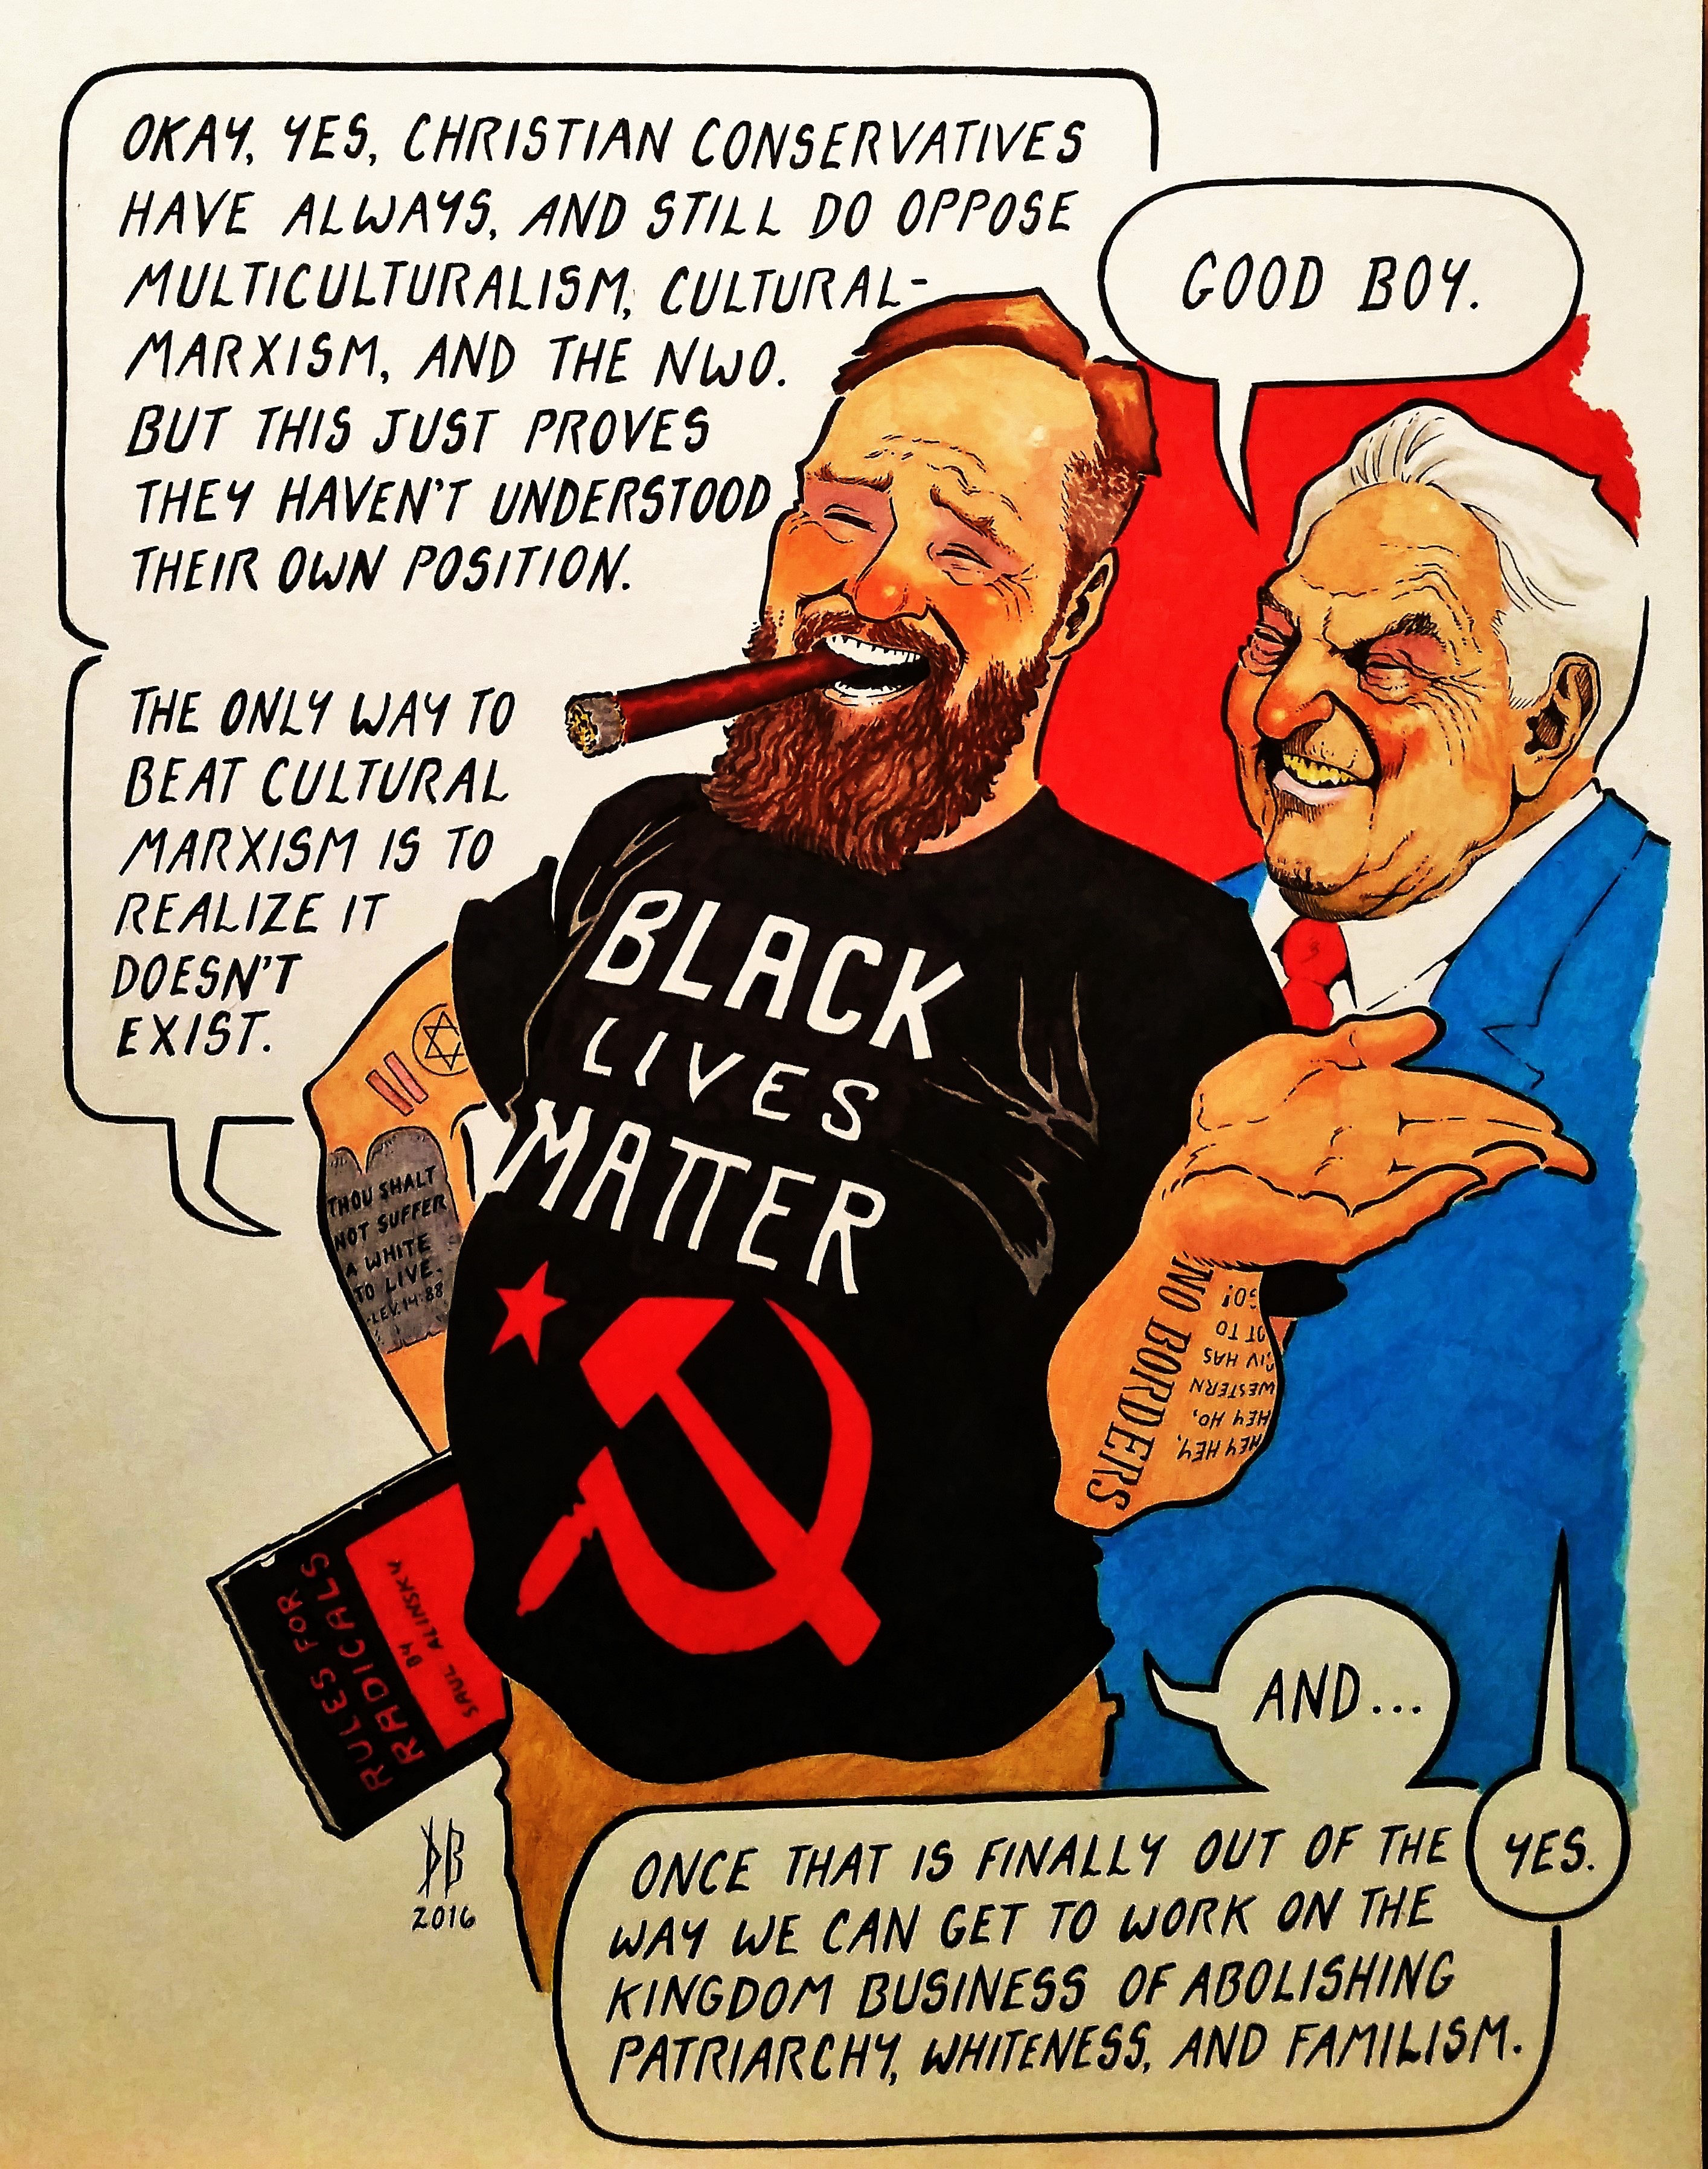 Joel McDurmon-cultural Marxism-Leon Trotsky-libertarianism-racism-American Vision-neo-theonomy